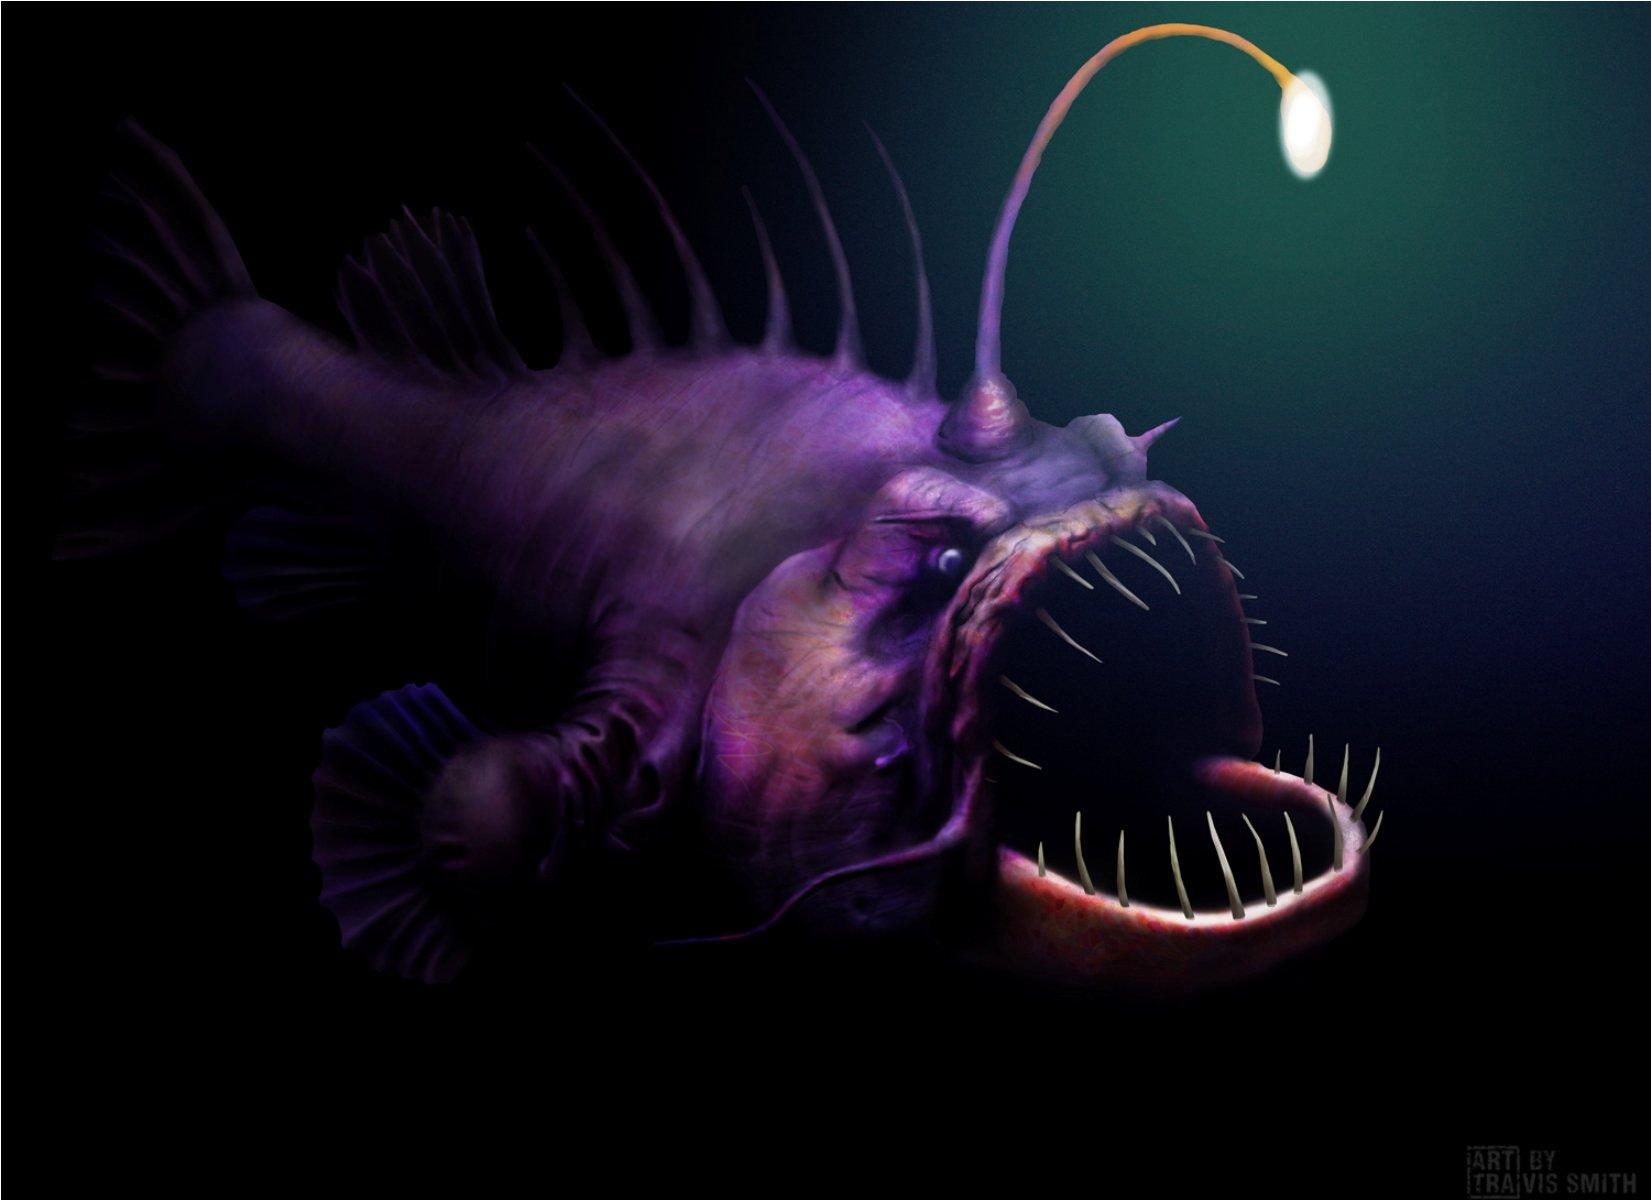 anglerfish, Fish, Ocean, Sea, Underwater, Dark, Creepy, Monster